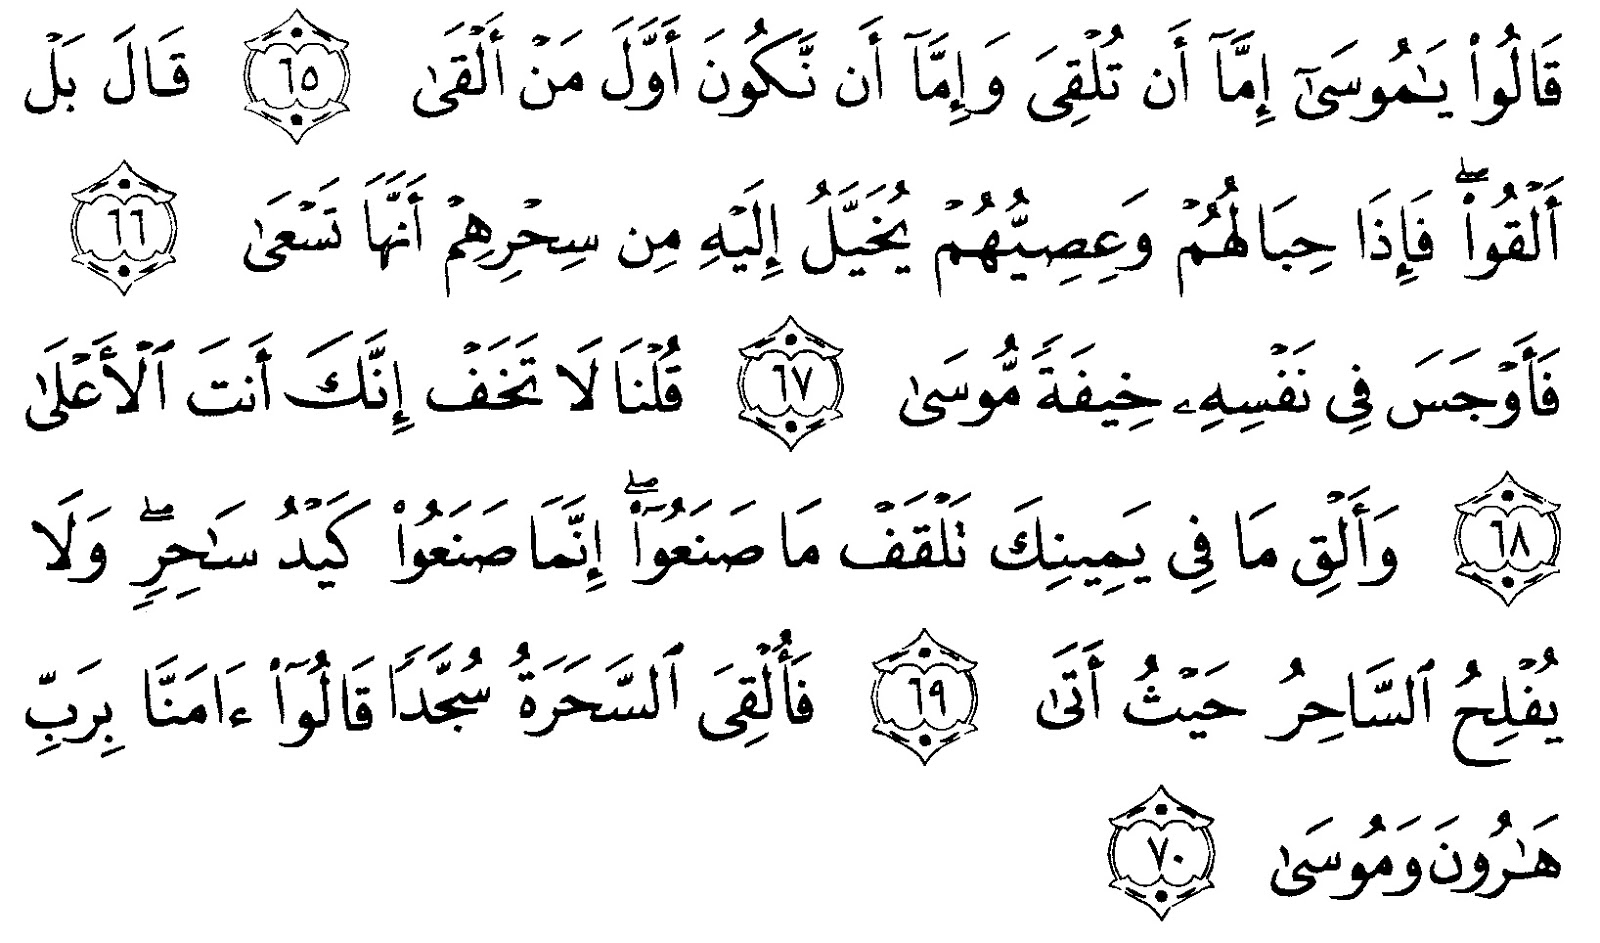 6) Surat Al-Kafirun, Al-Ikhlas, Al-Falaq, dan An-Nas.